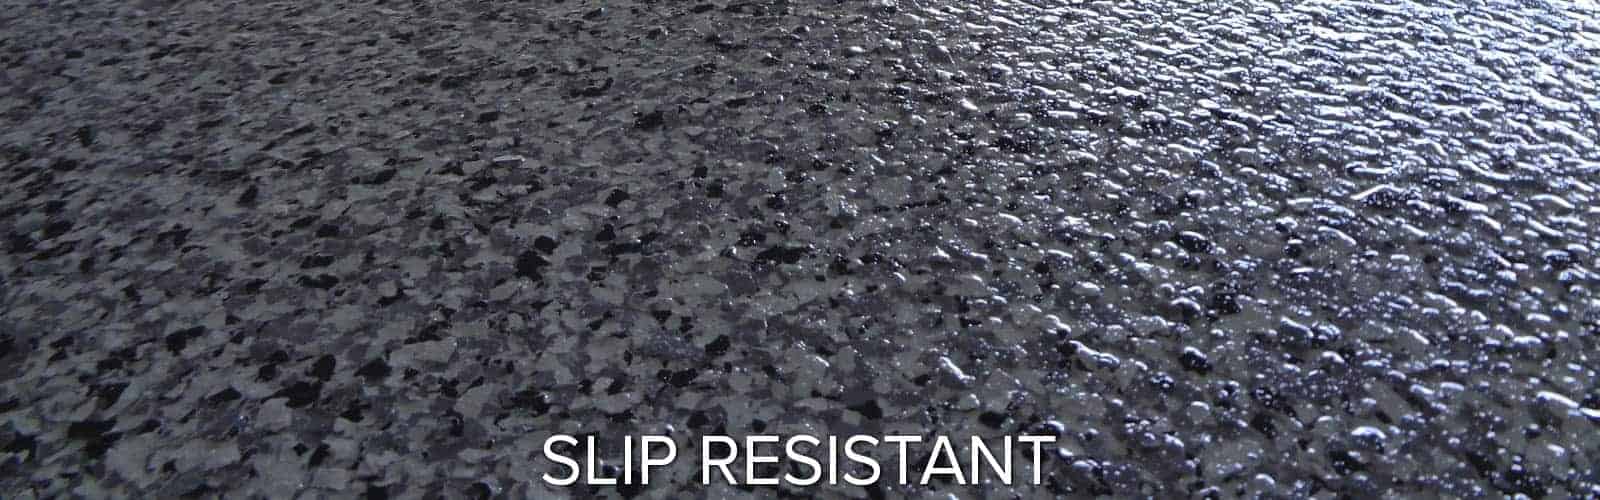 https://www.garagefloorcoating.com/wp-content/uploads/2018/09/slip-resistant-anti-skid-aggregate-for-epoxy-flooring-garage-floor-coatings.jpg